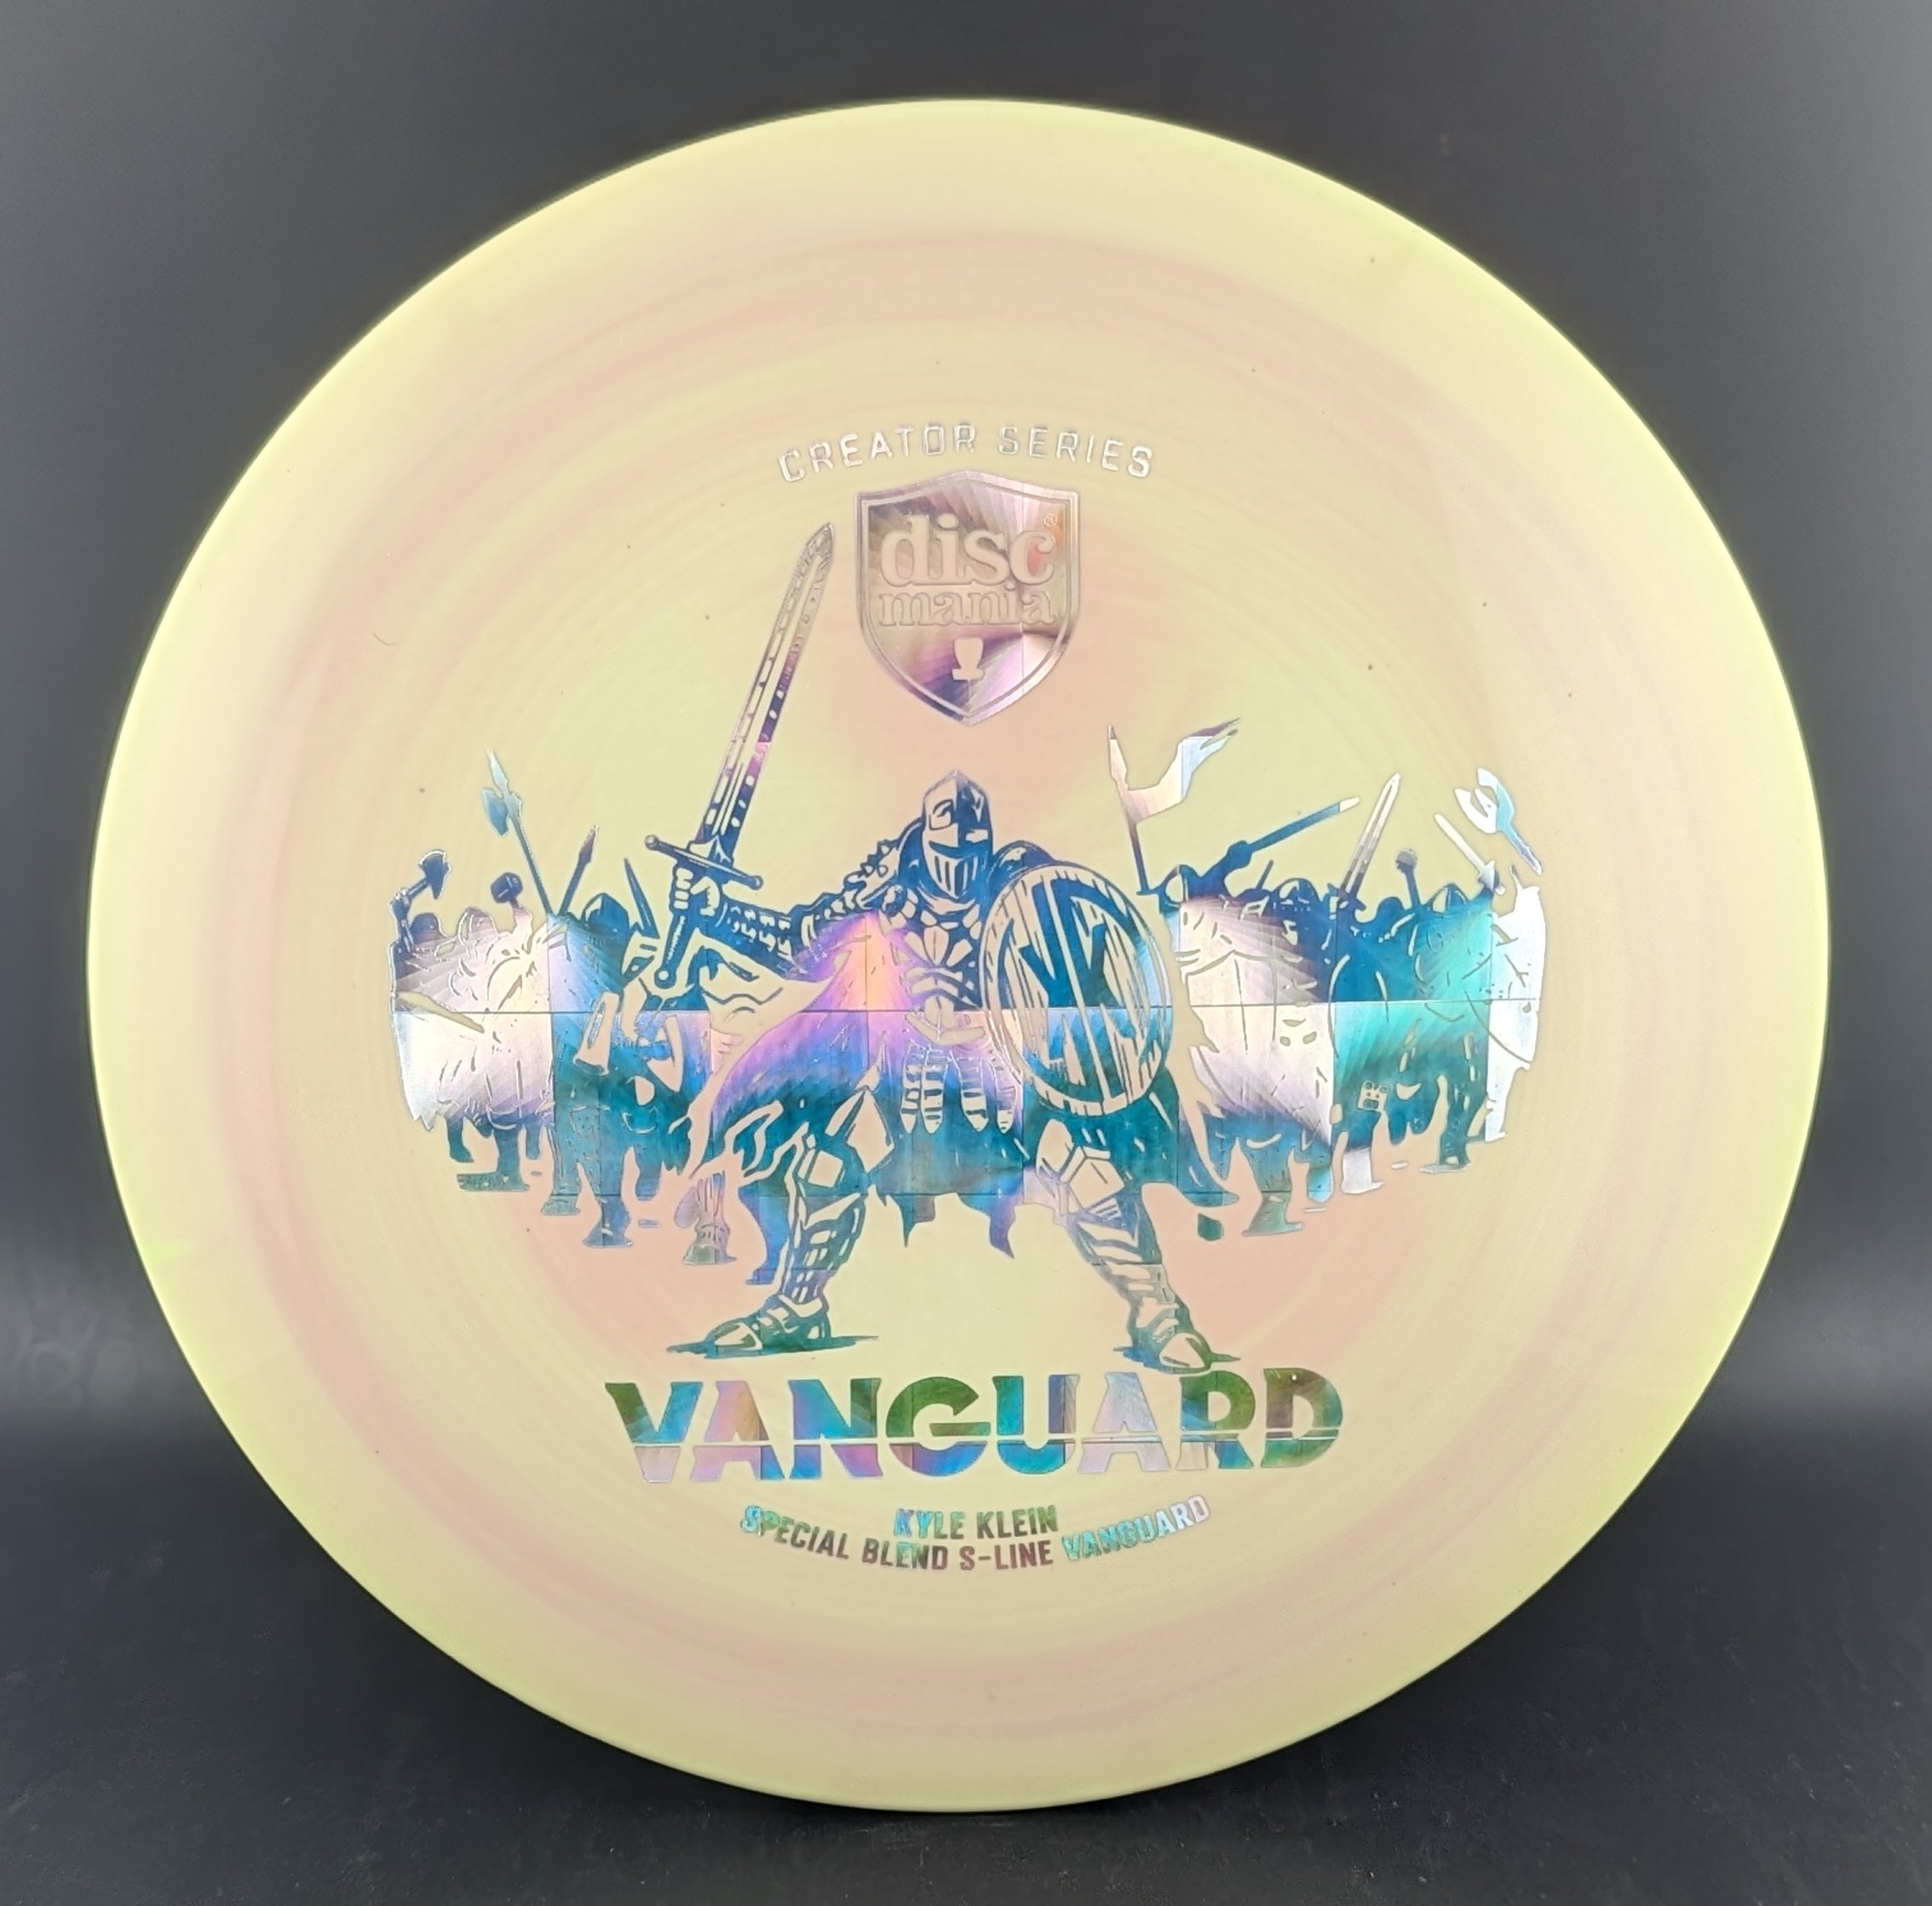 Kyle Klein Creator Series Special Blend Vanguard - 0